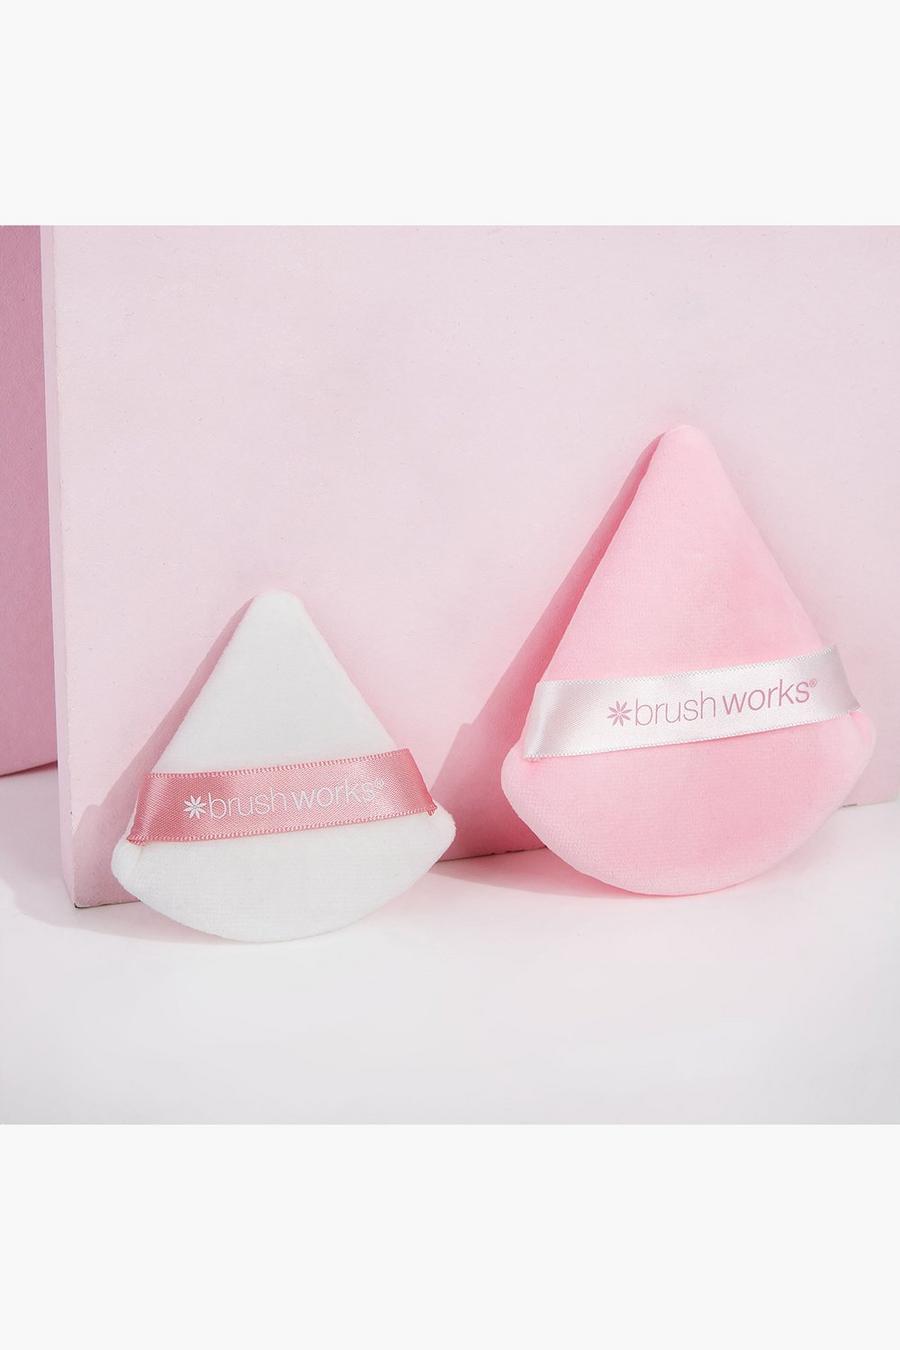 Pink Brushworks Triangular Powder Puff Duo